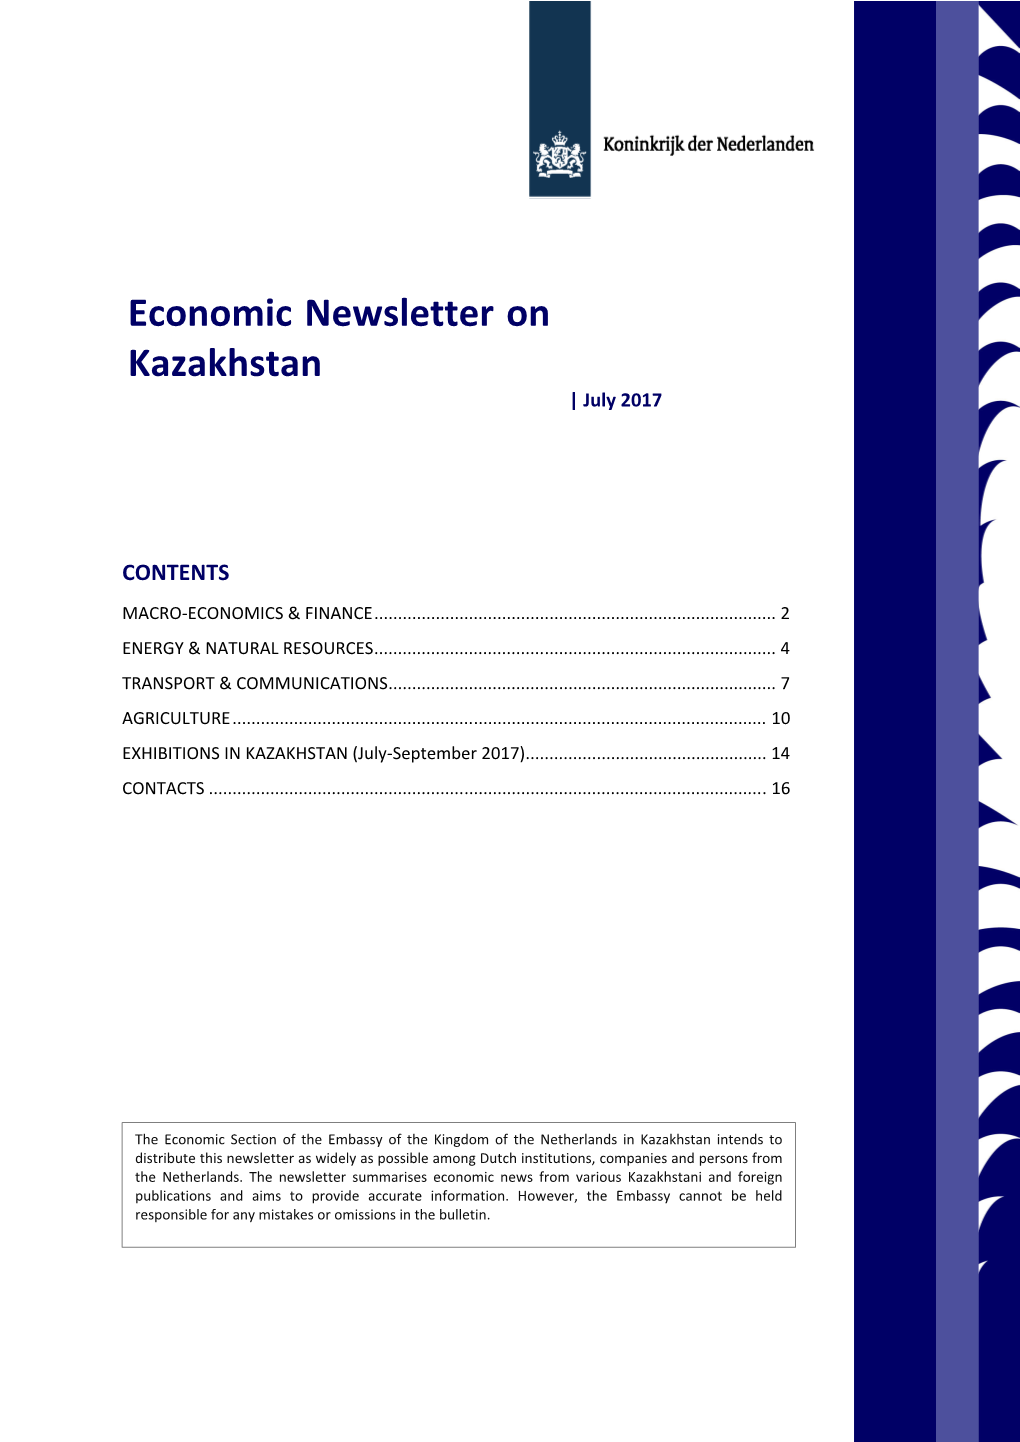 Economic Newsletter on Kazakhstan | July 2017